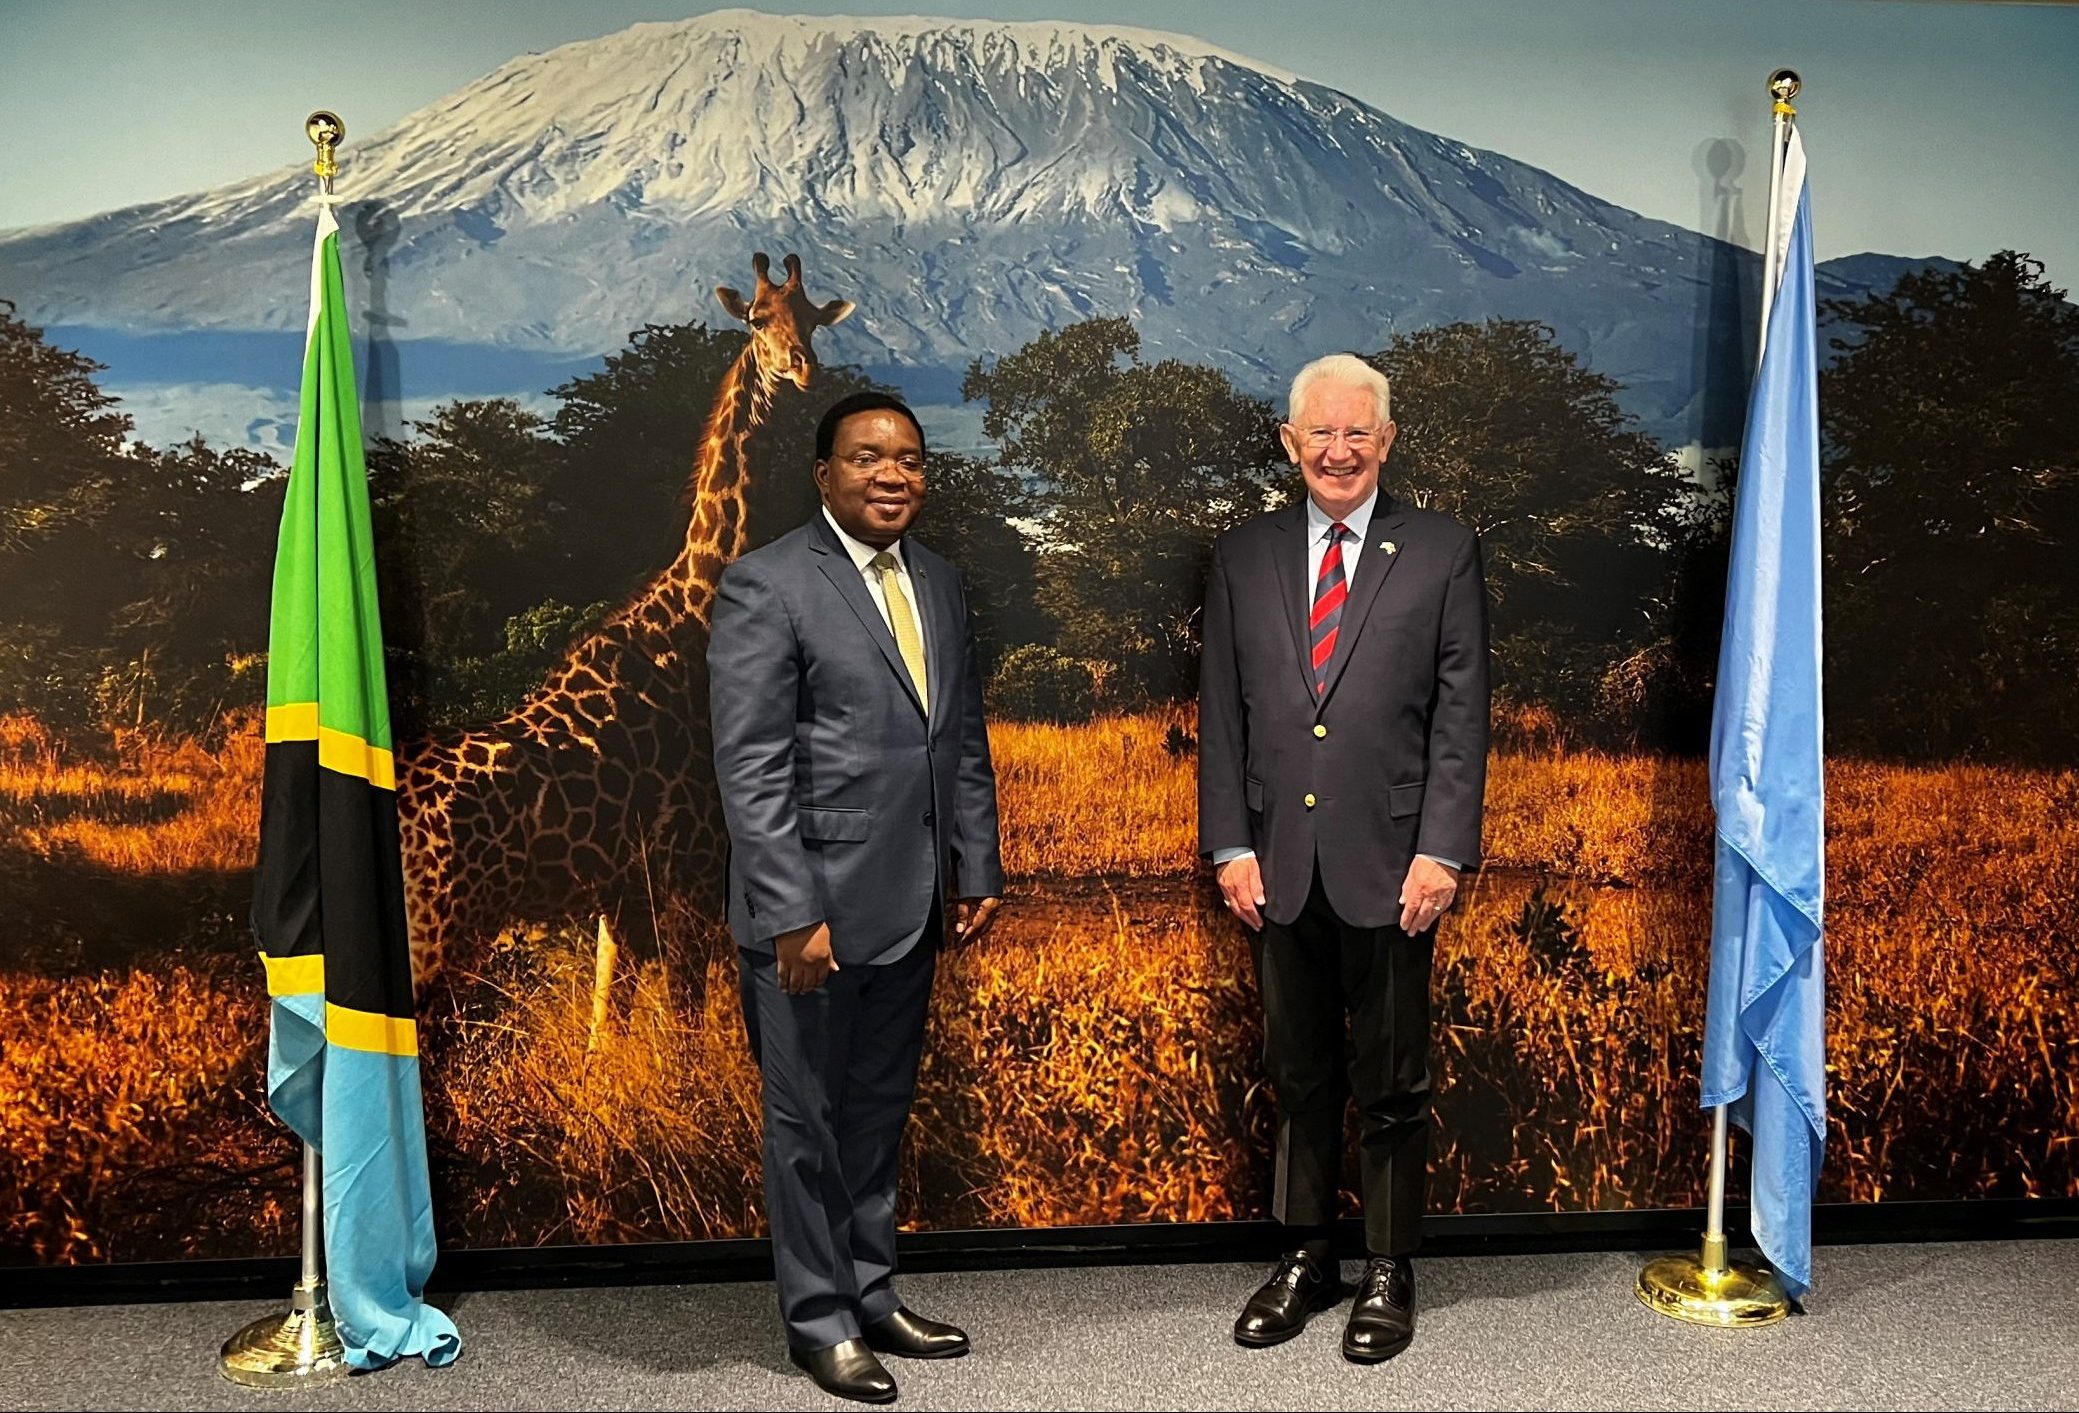 H.E. Ambassador Paul Beresford-Hill met with H.E. Ambassador Hussein Athuman Kattanga, the Permanent Representative of the United Republic of Tanzania to the United Nations